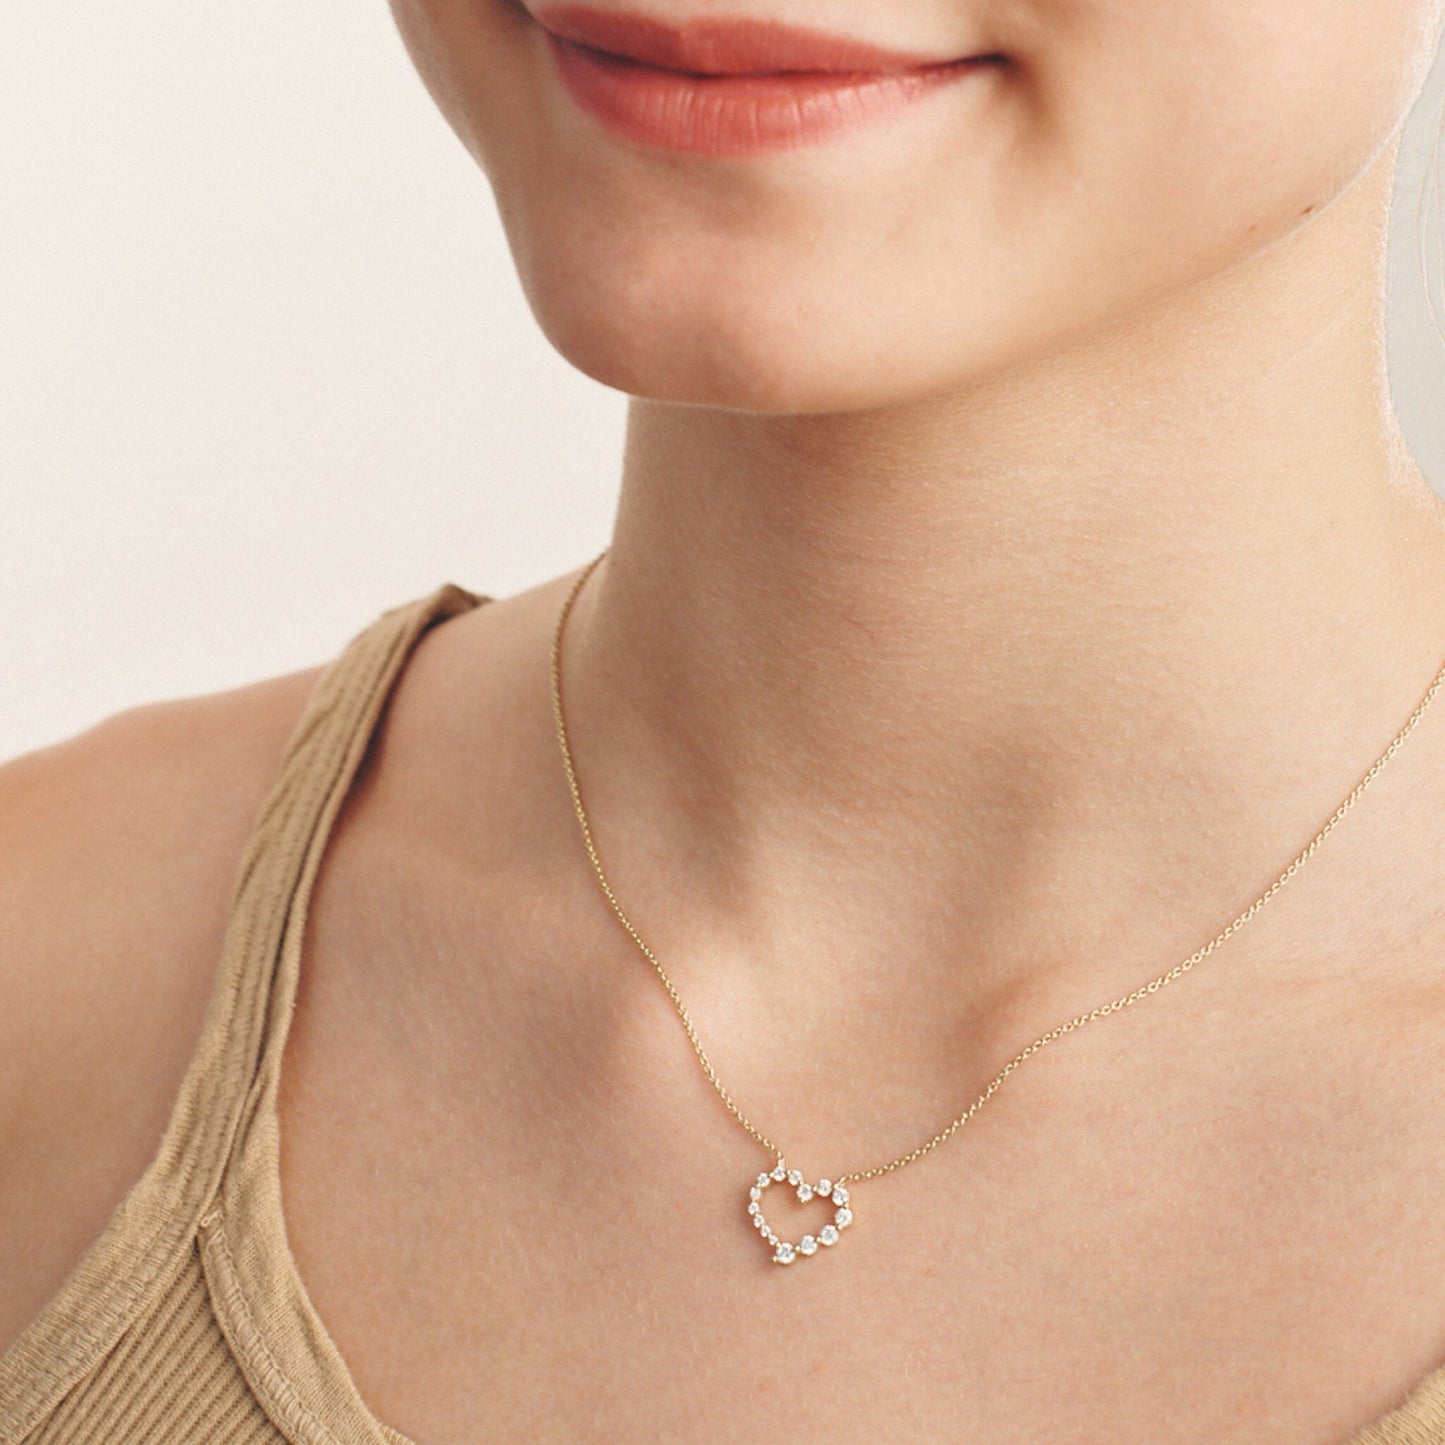 Diamond Heart Pendant - 14K White Gold Necklaces magal-dev 